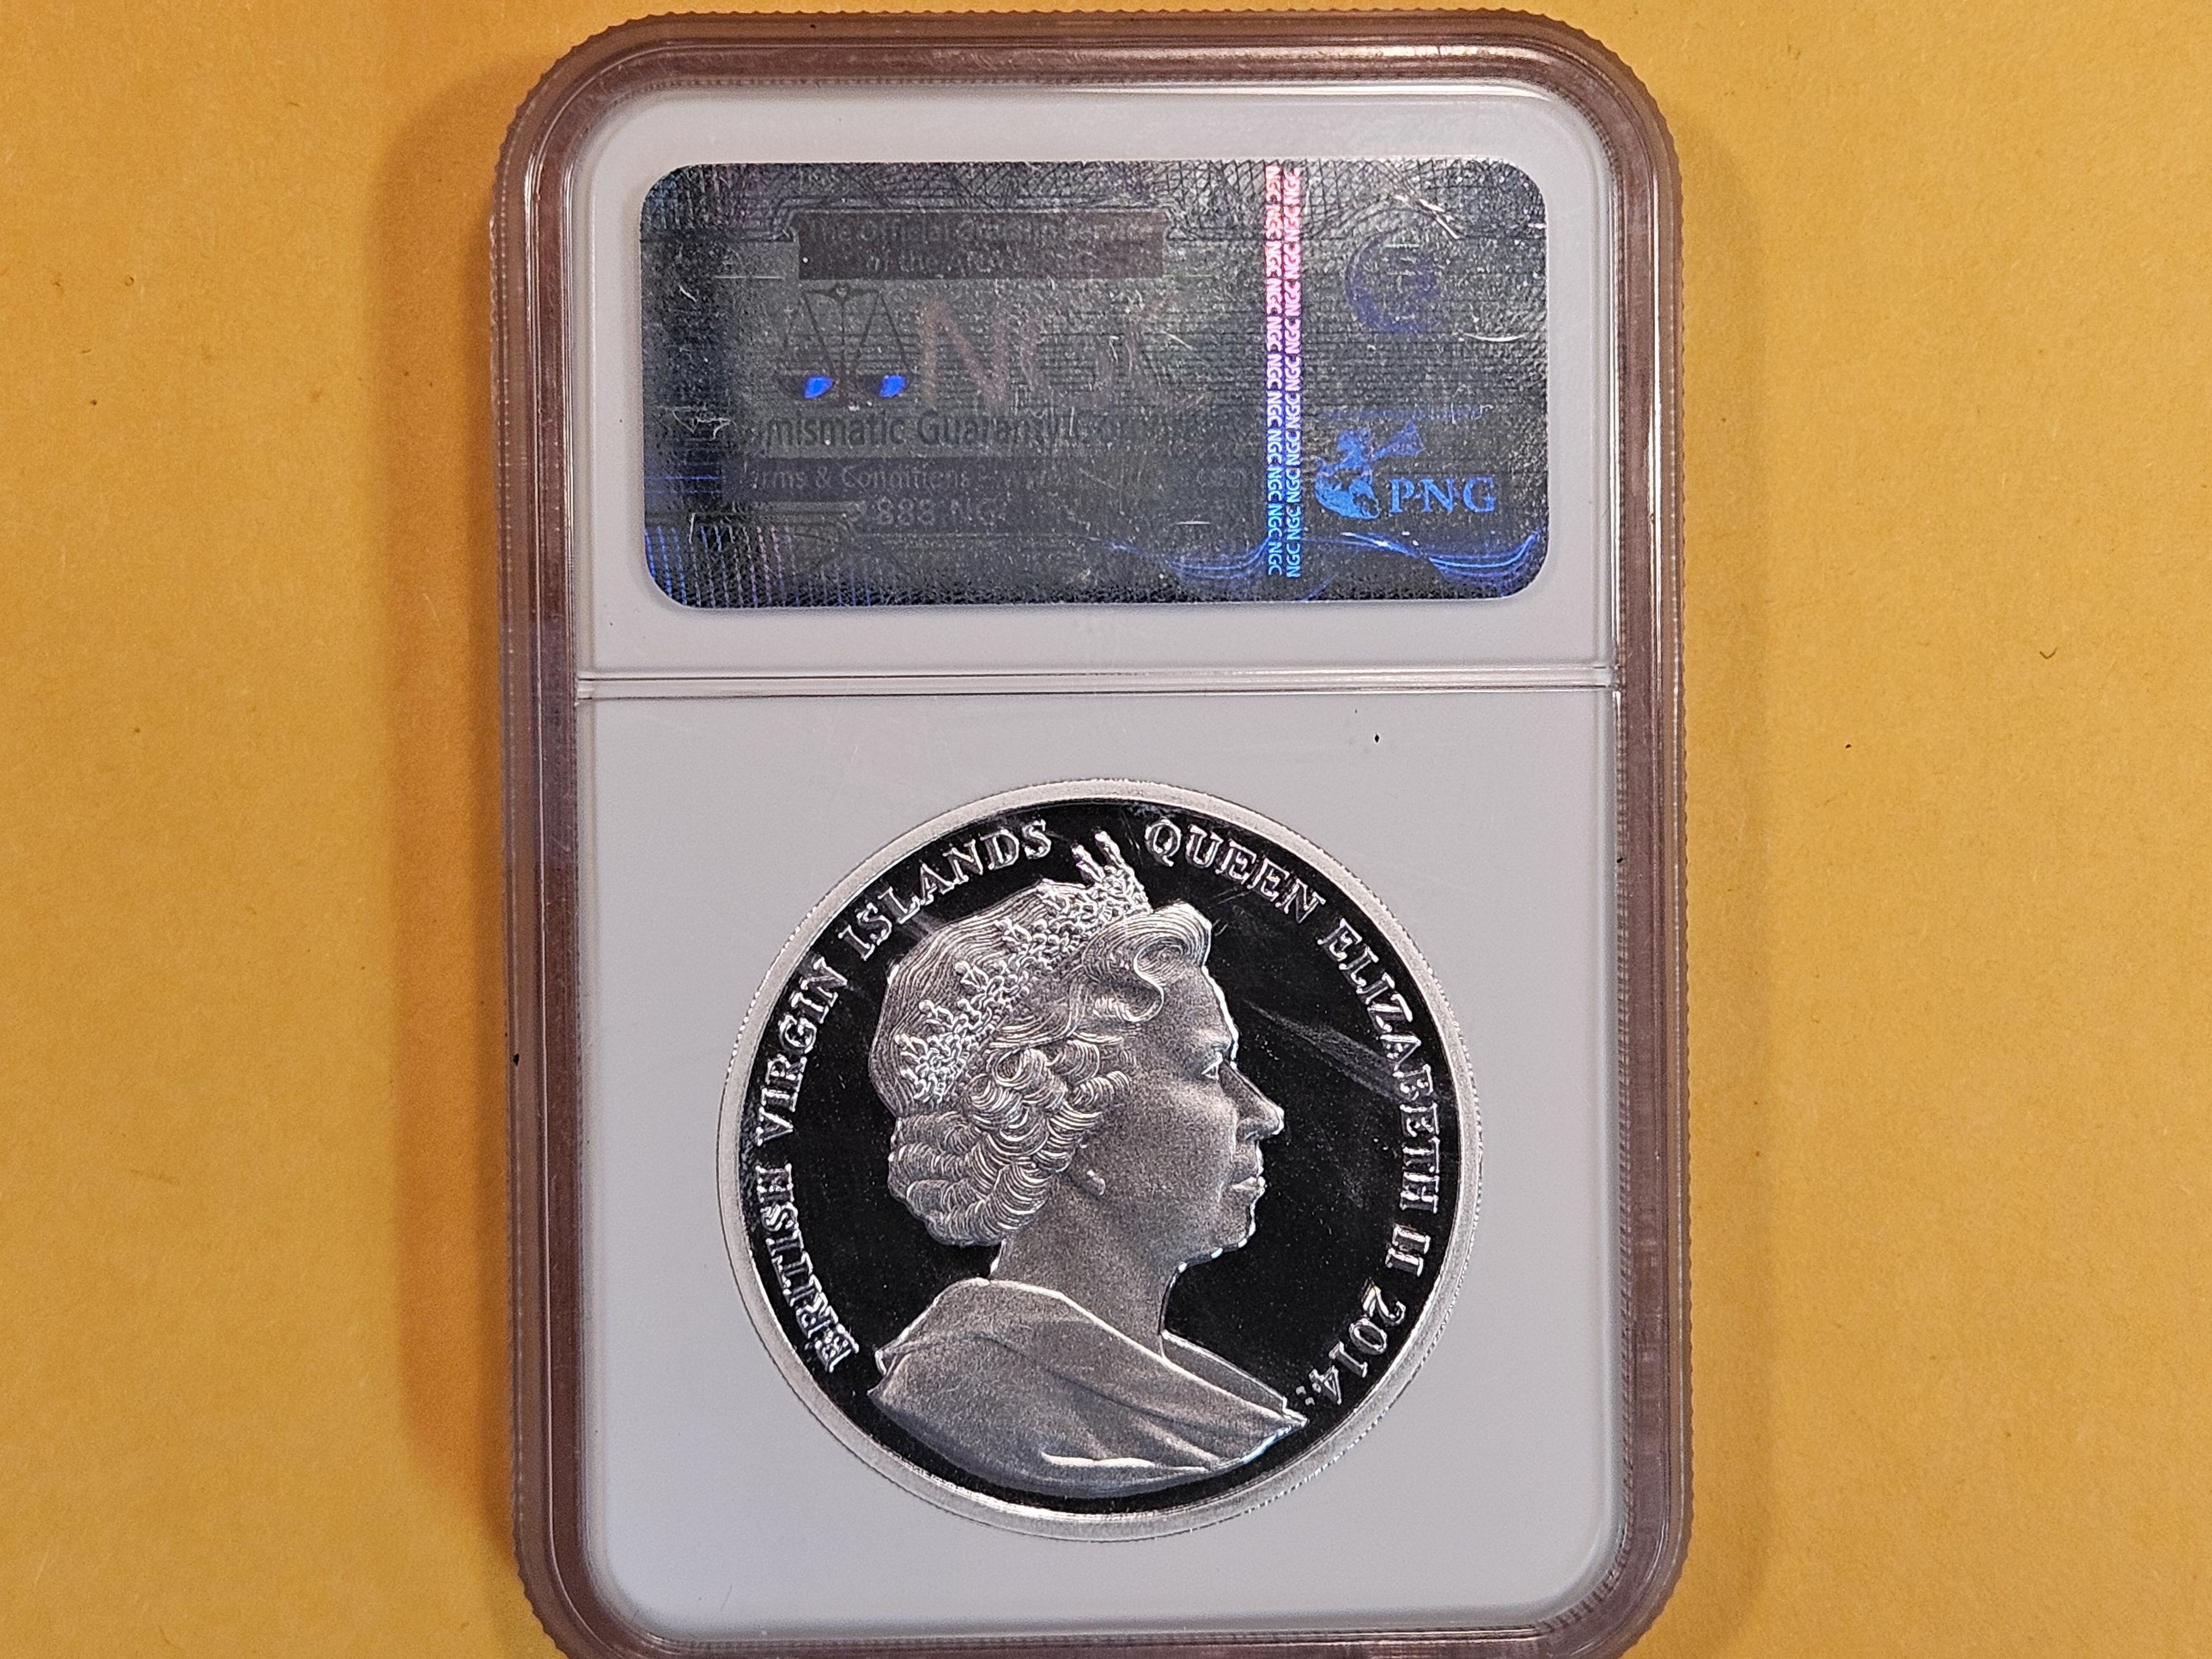 GEM! NGC 2014 British Virgin Islands Silver 10 dollars in Proof 69 Ultra Cameo